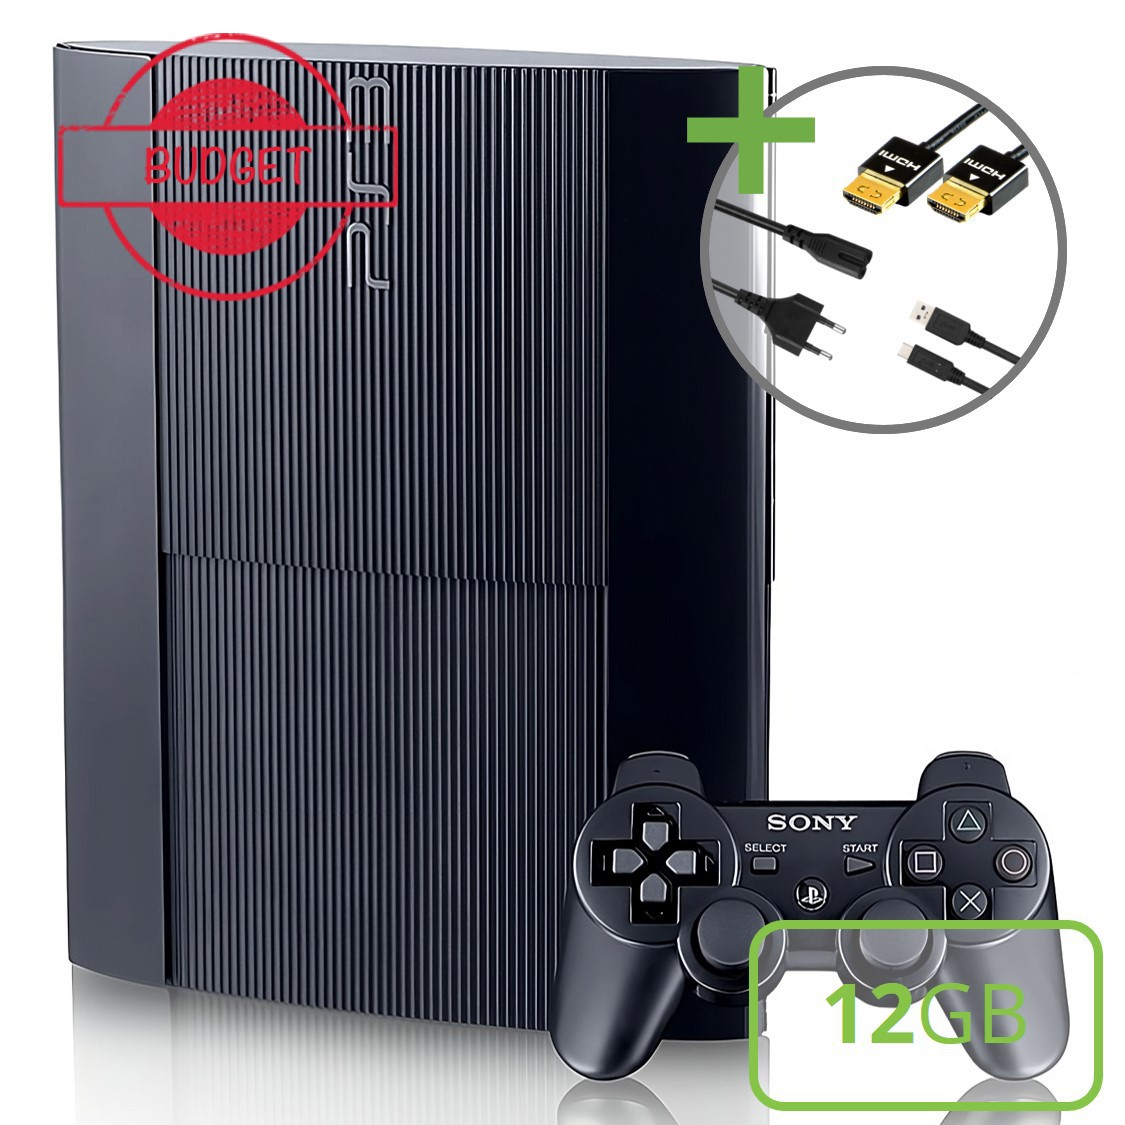 Sony PlayStation 3 Super Slim (12GB) Starter Pack - DualShock Edition - Budget - Playstation 3 Hardware - 2